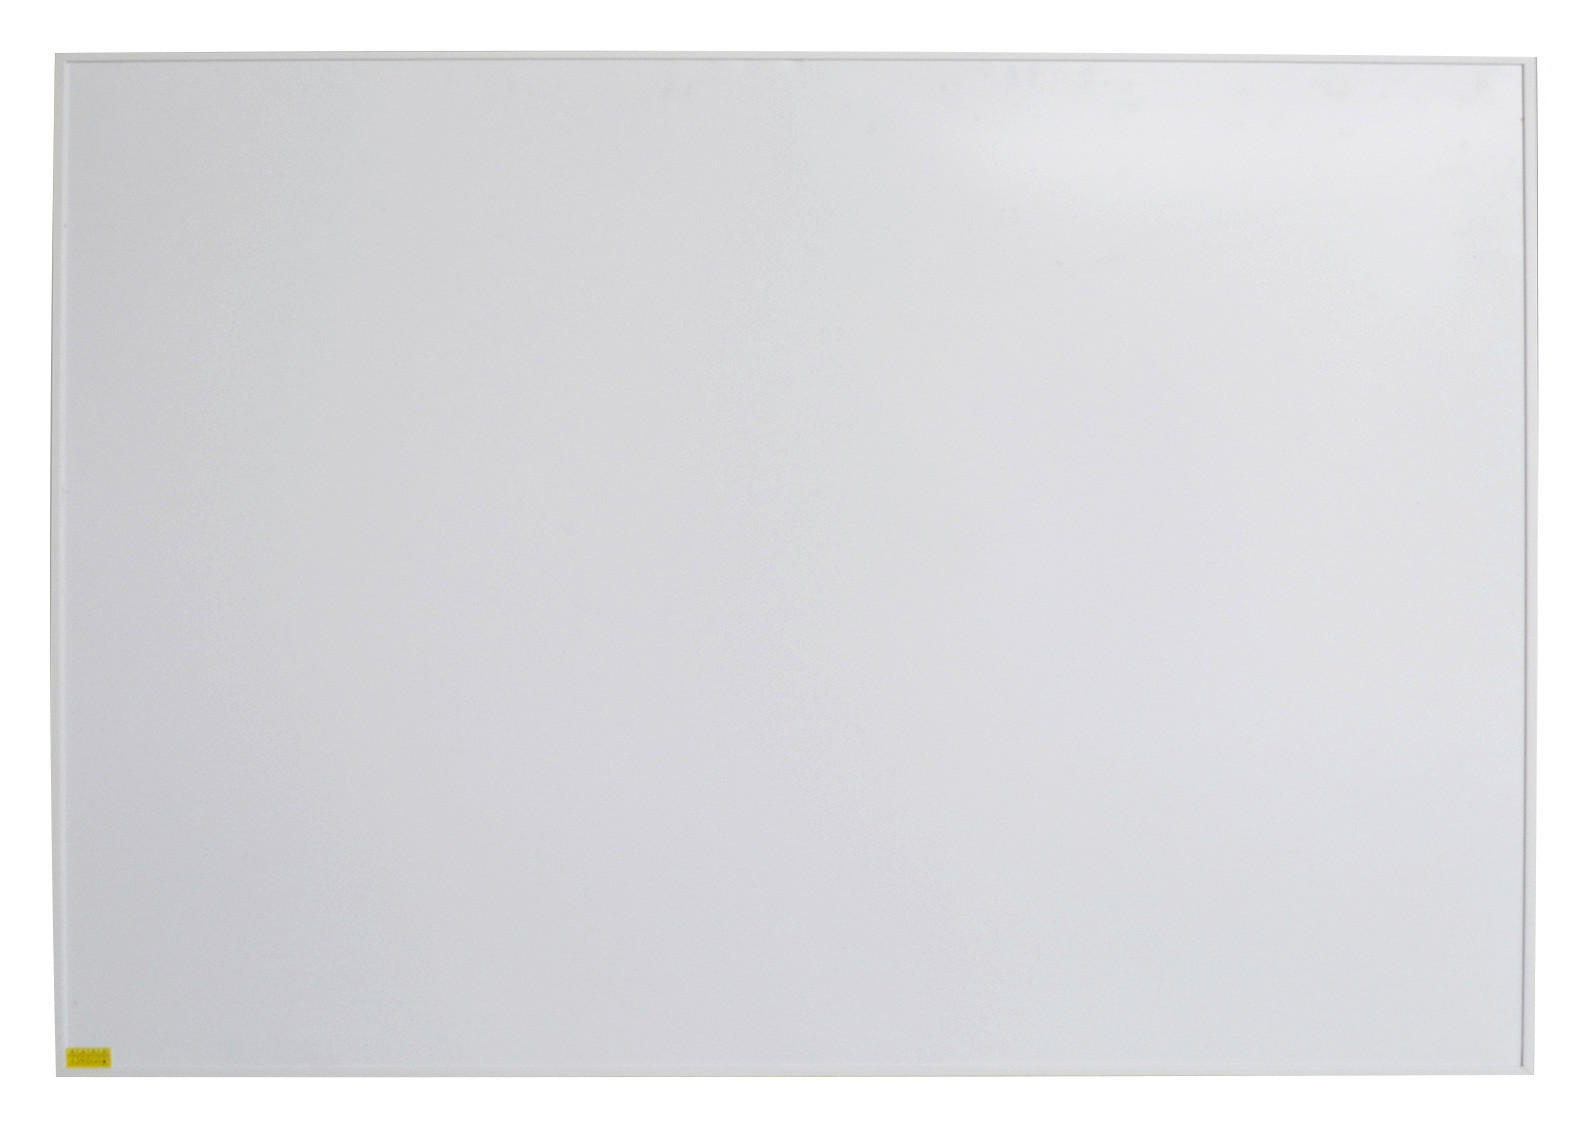 INFRAROT-HEIZPANEEL 119,5/75/2,2 cm 900 W Ambiente  - Weiß, Trend, Kunststoff/Metall (119,5/75/2,2cm) - Atrigo